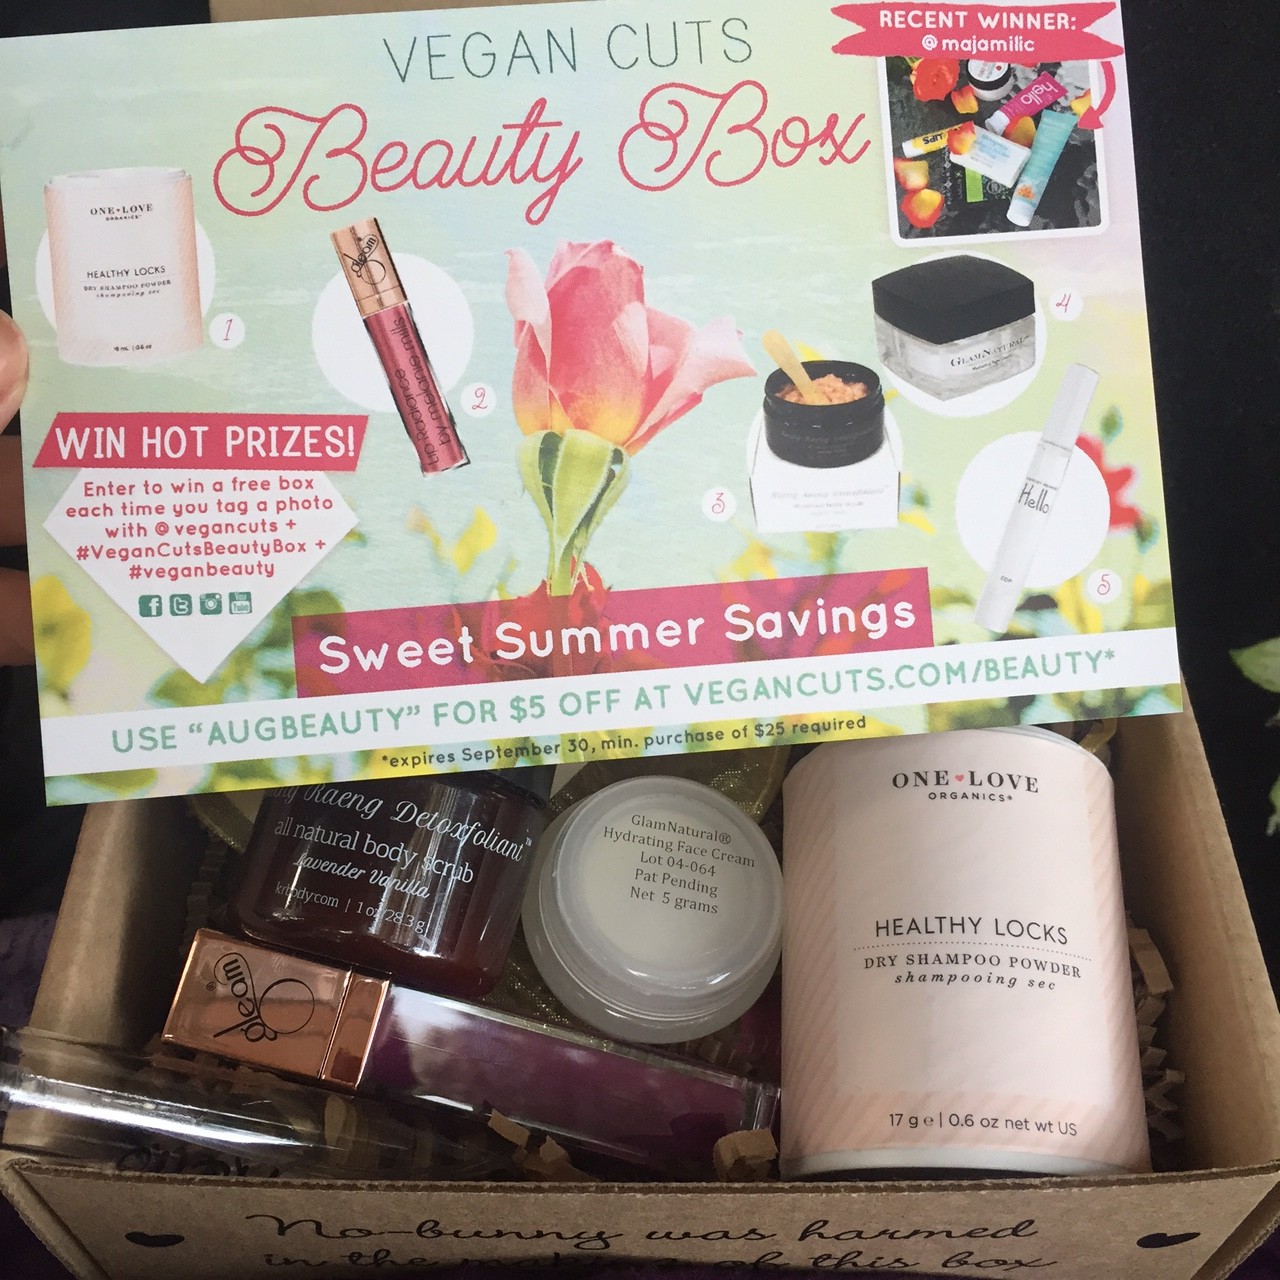 August 2015 Vegan Cuts Beauty Box Review